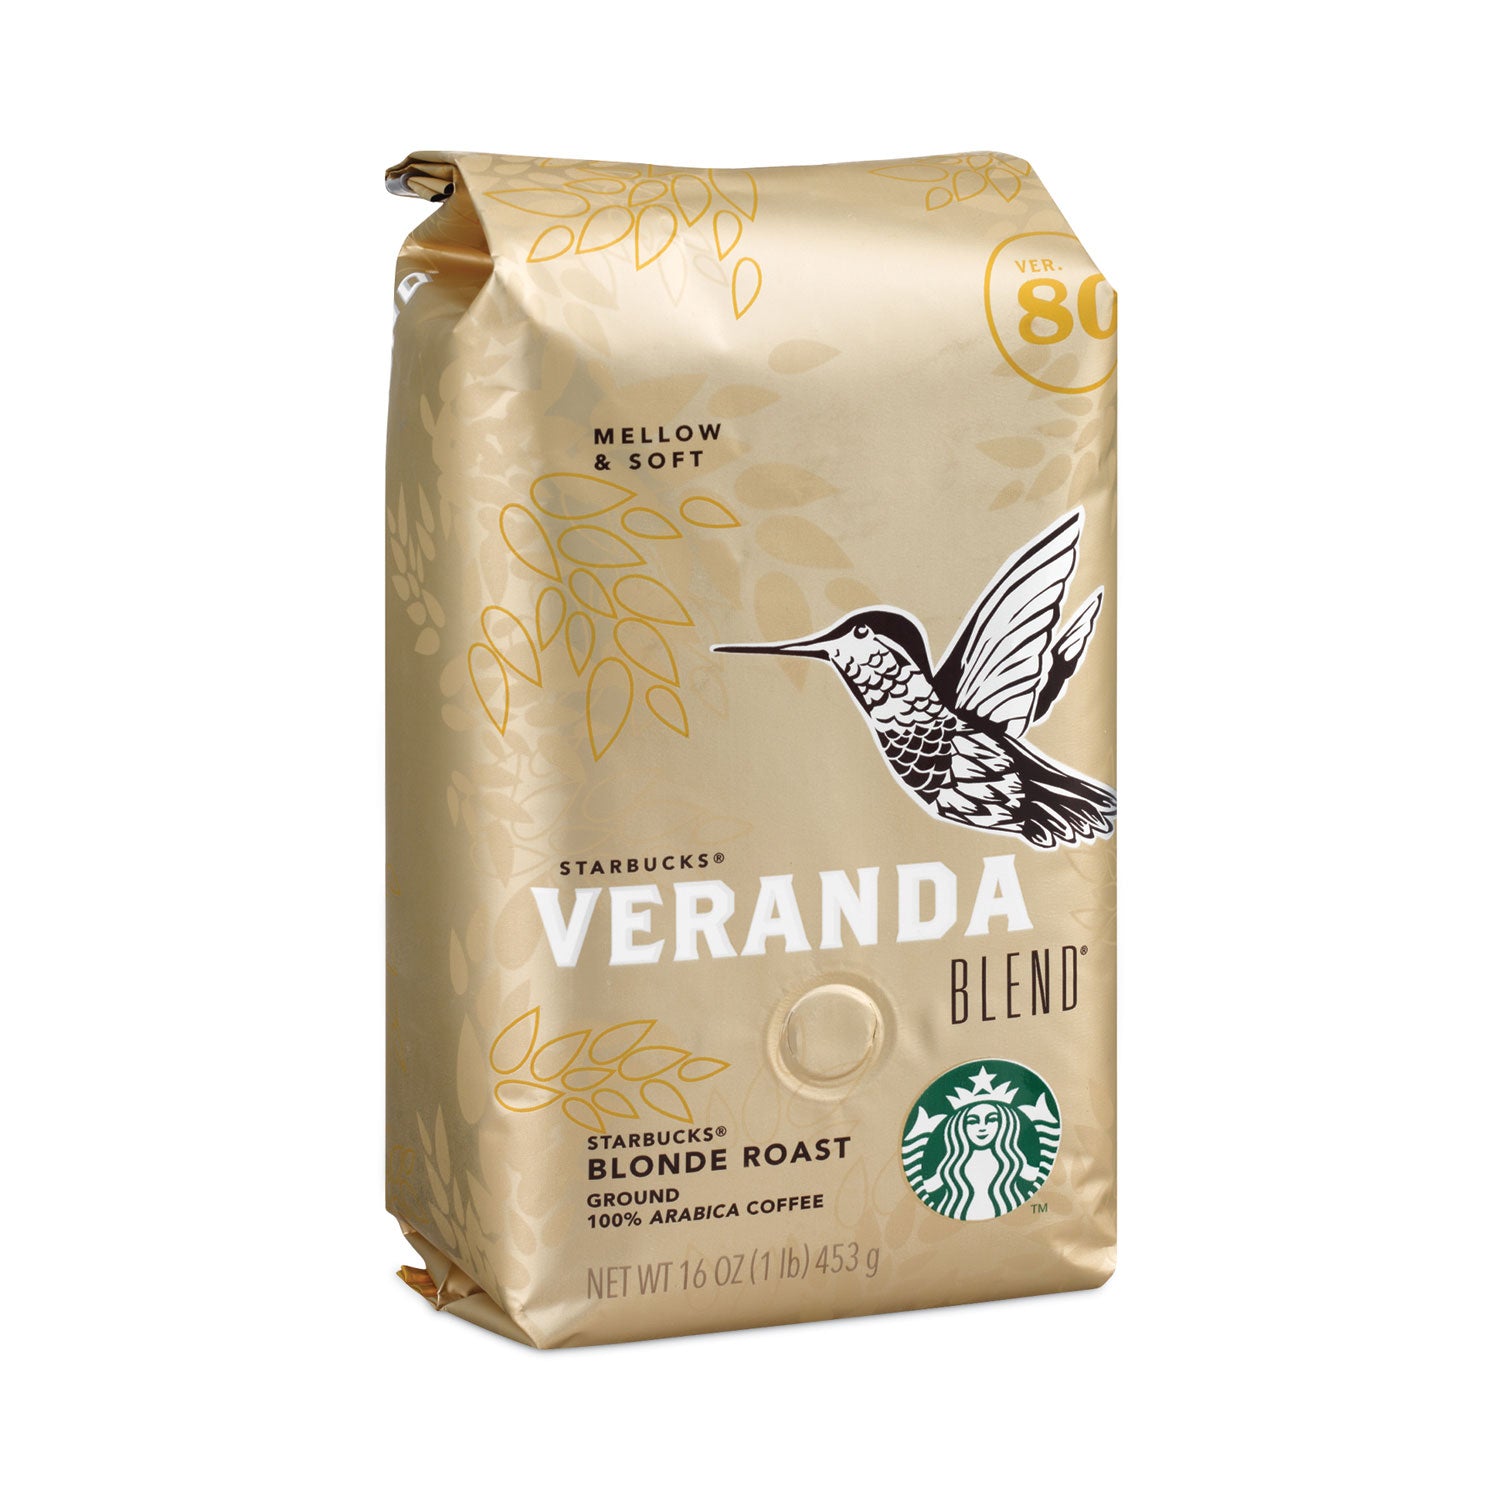 veranda-blend-coffee-ground1-lb-bag-6-carton_sbk11019631ct - 1